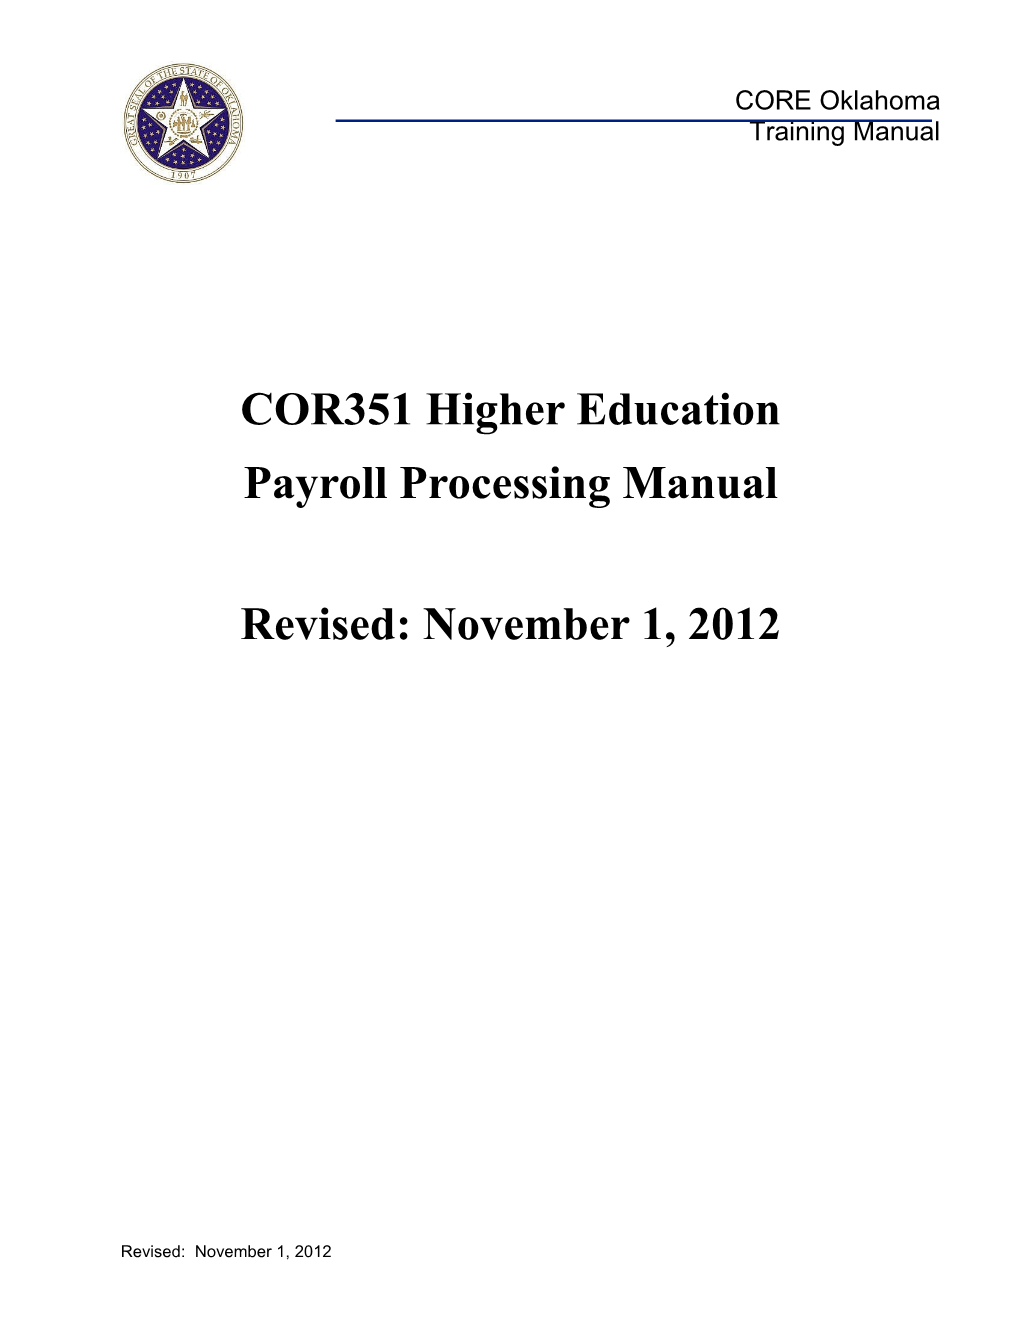 COR351 Higher Education Payroll Processing Manual